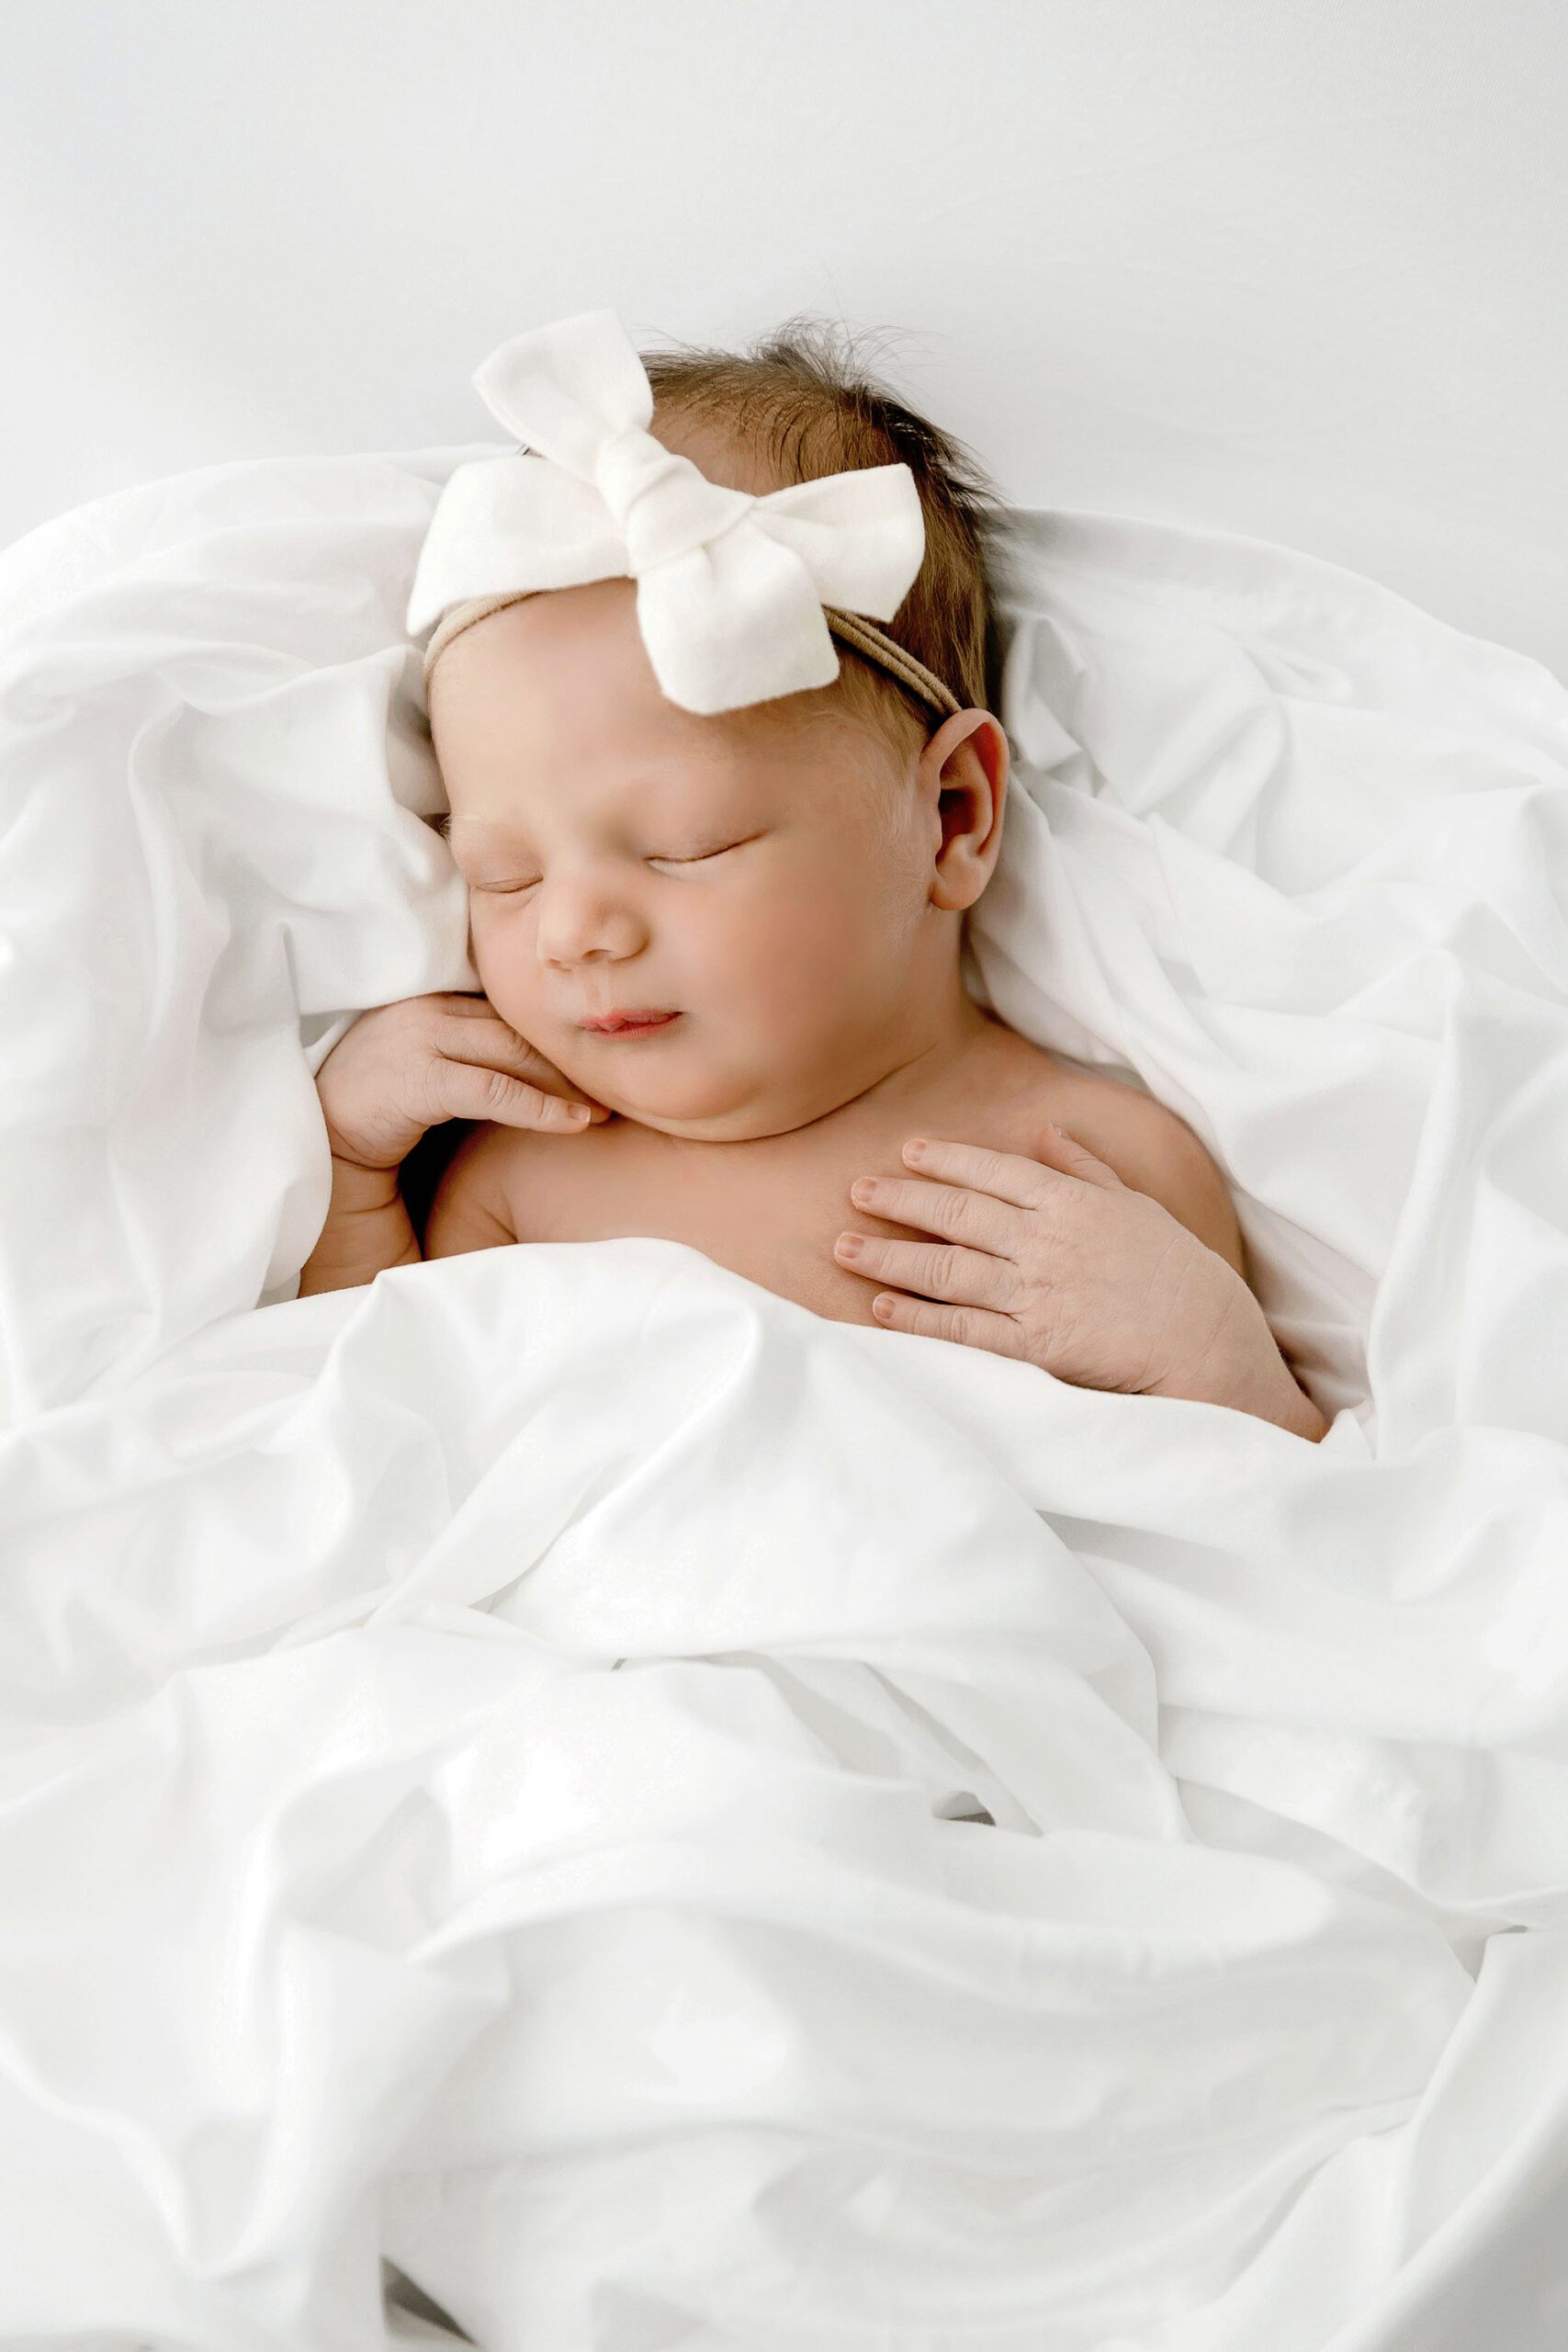 Menifee newborn photographer